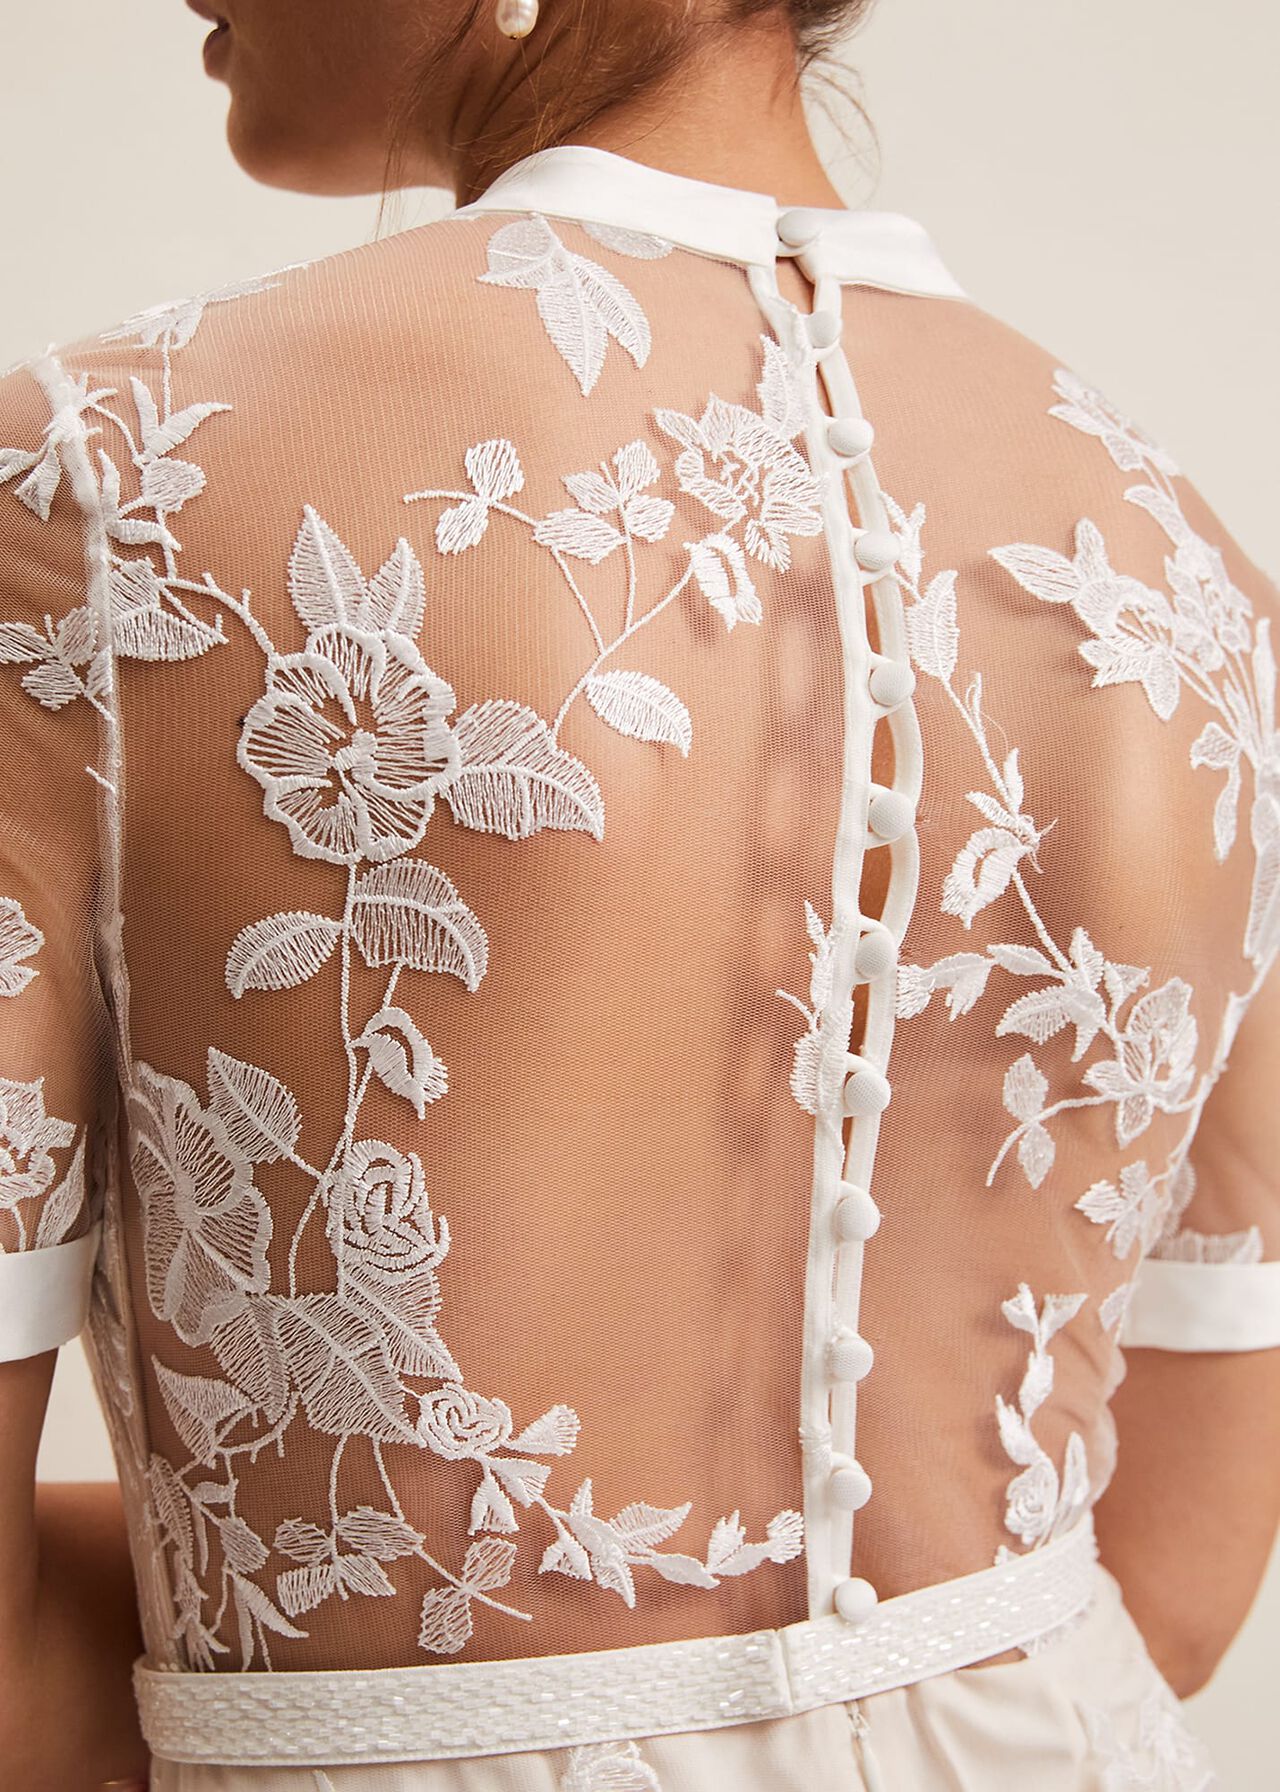 Poppy Embroidered Wedding Dress